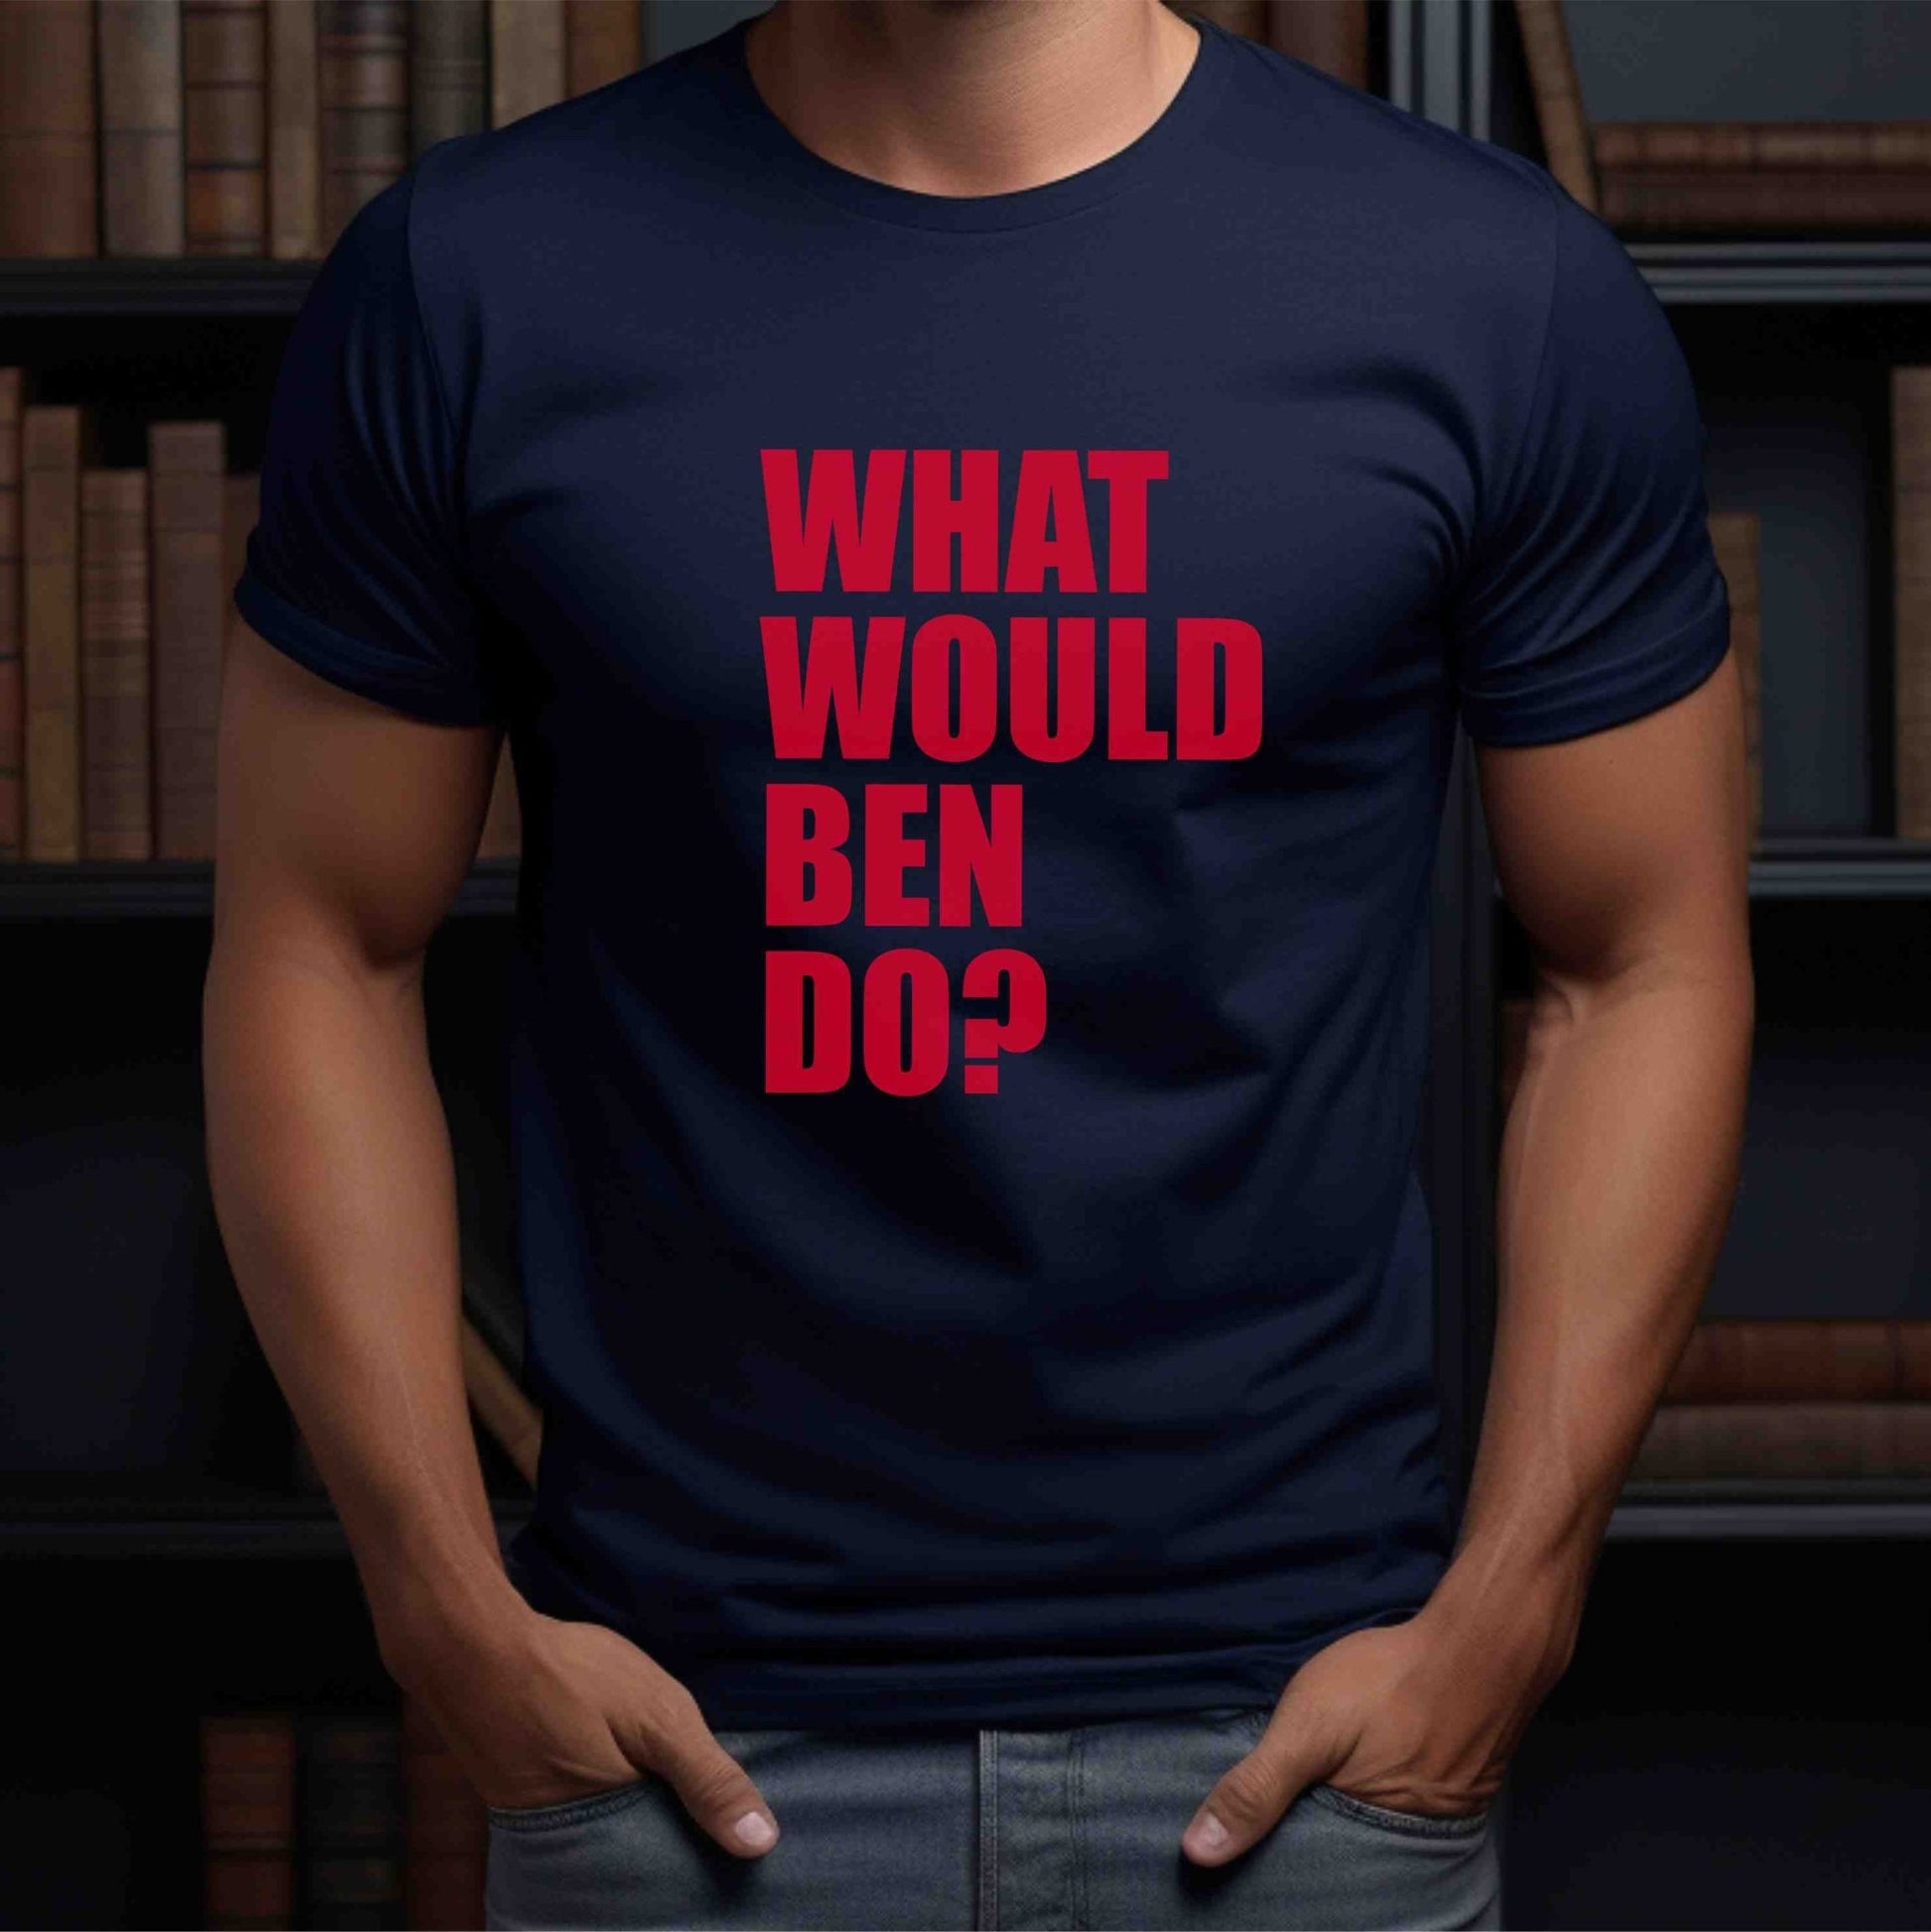 What would Ben Do? Shirt, Funny political, podcast, #1 song, rap artist, commentator, conservative, republican - SBS T Shop